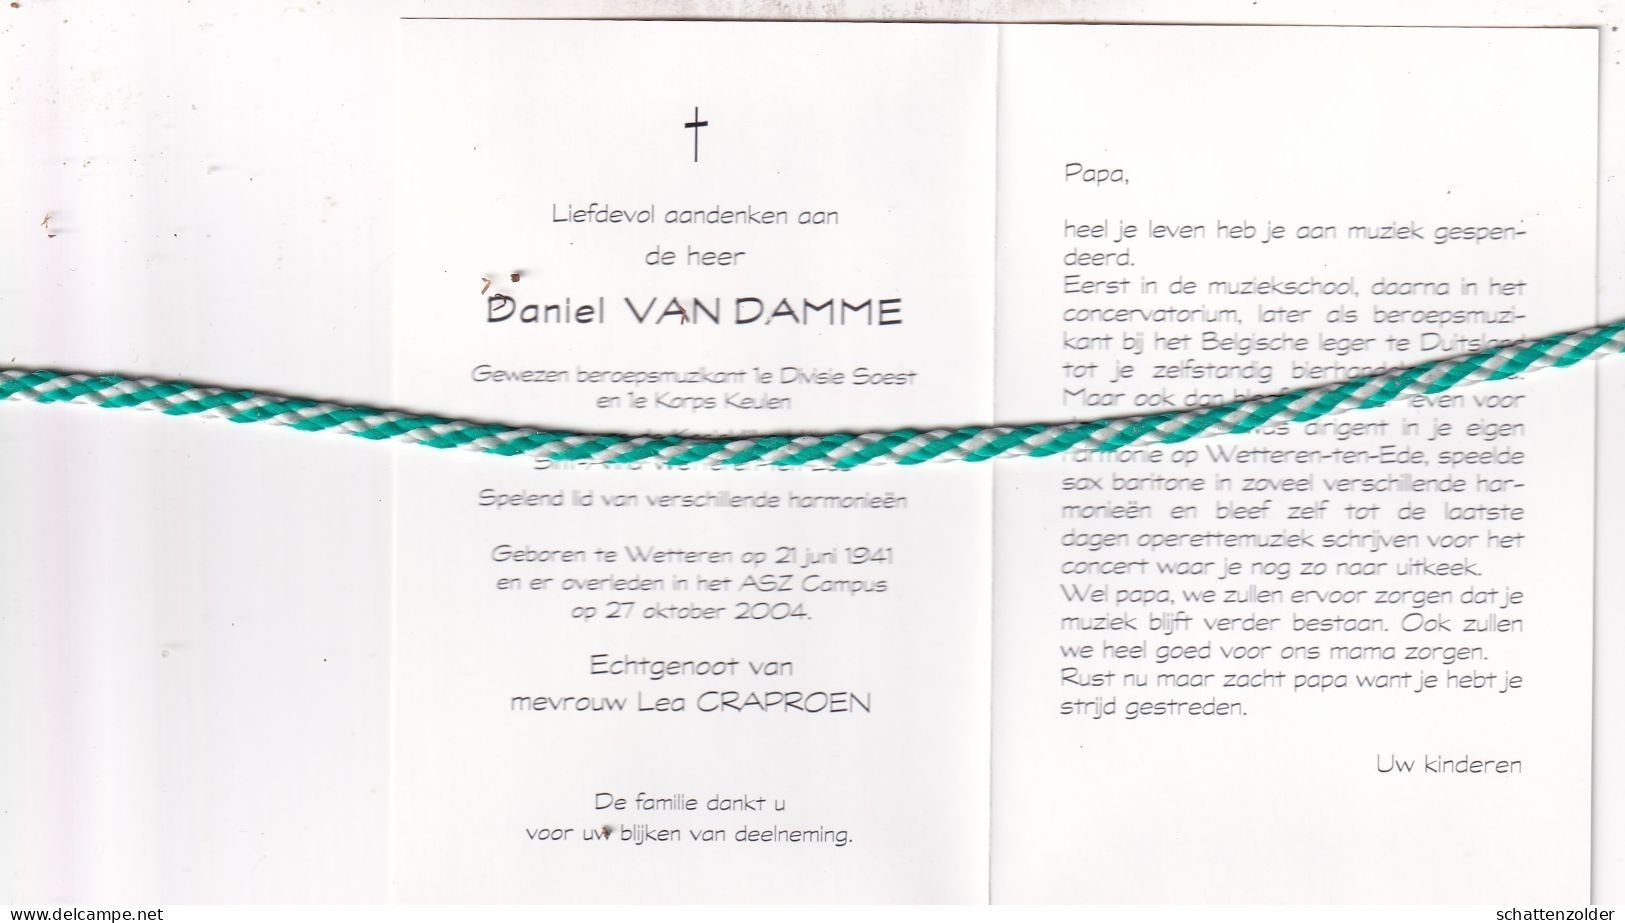 Daniel Van Damme-Craproen, Wetteren 1941, 2005. Gewezen Beroepsmuzikant. Foto - Décès